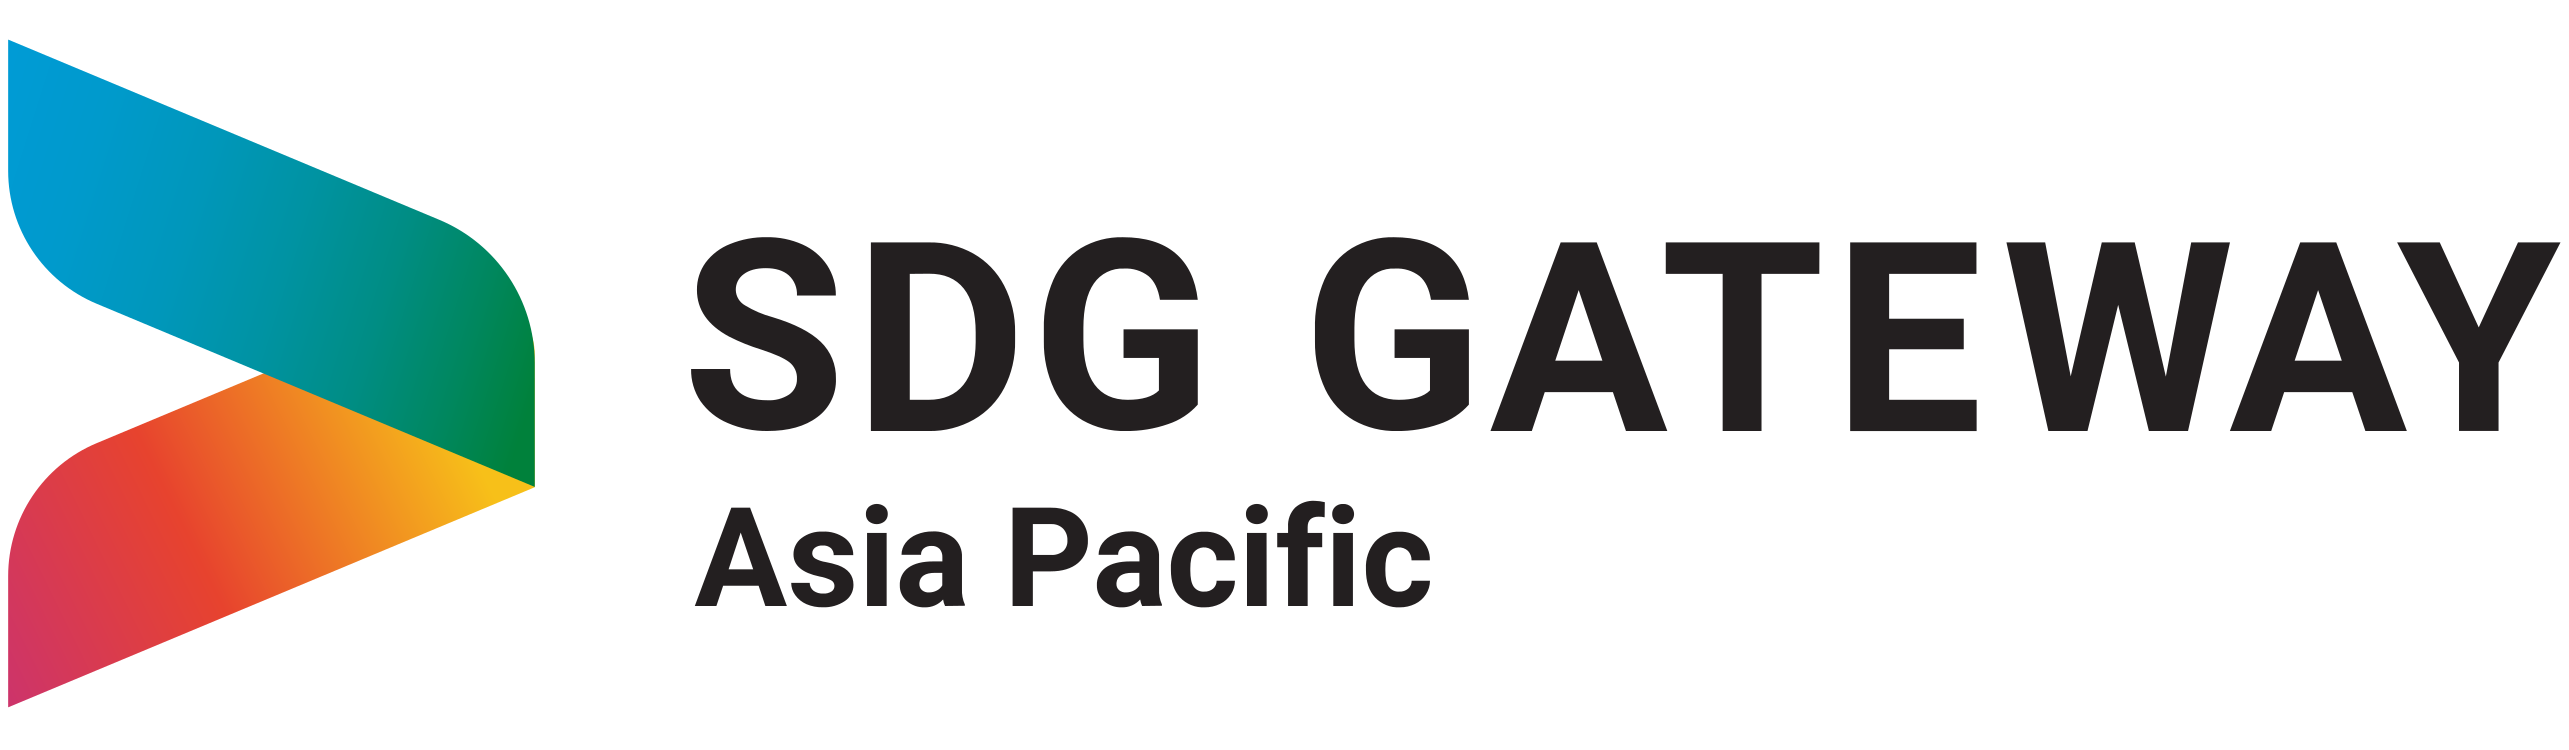 sdg gateway logo